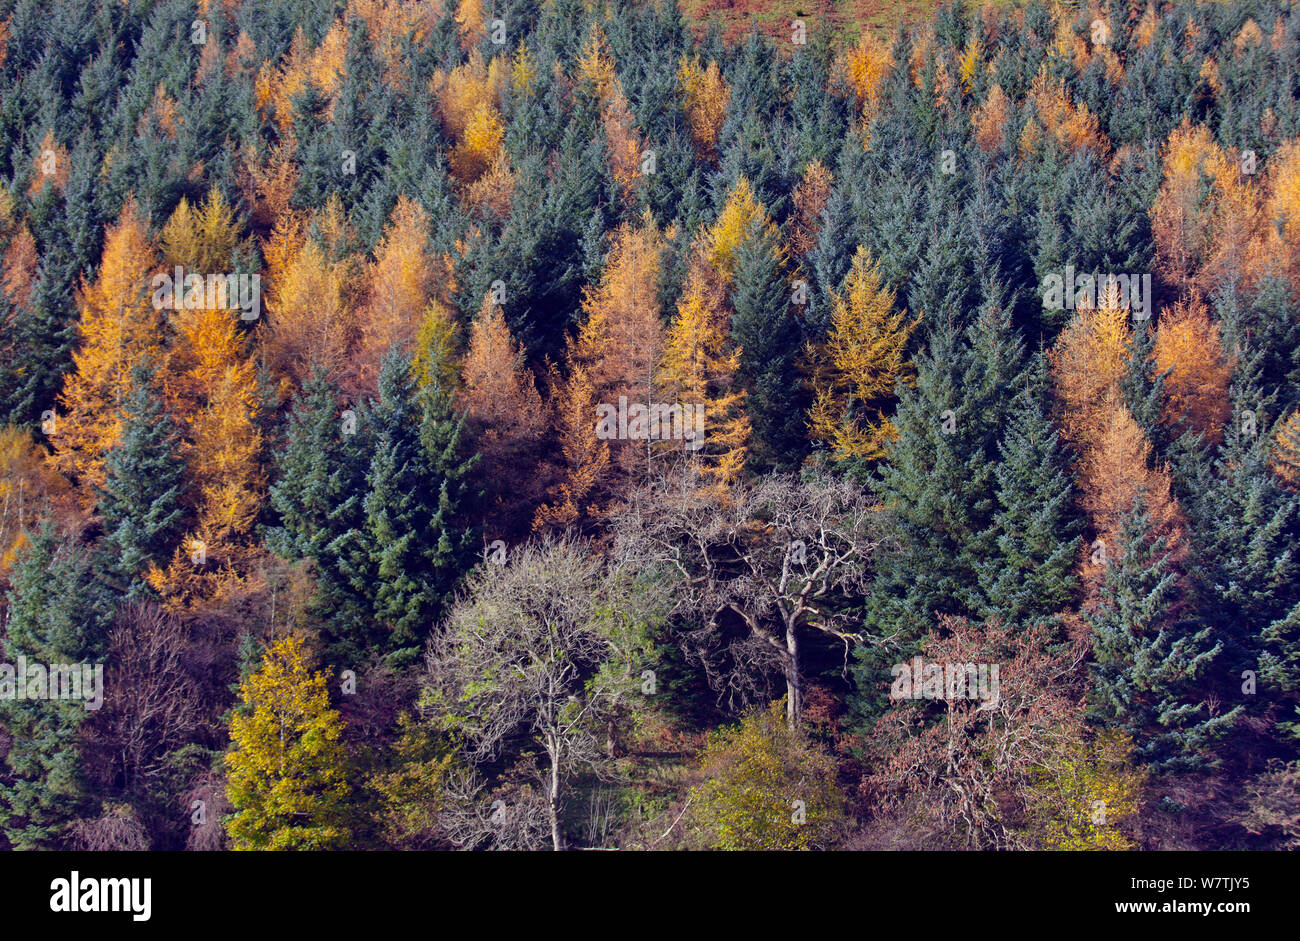 Plantation of evergreen  Norway spruce (Picea abies) and deciduous  Larch (Larix decidua) trees, North Yorshire, England, UK, November. Stock Photo